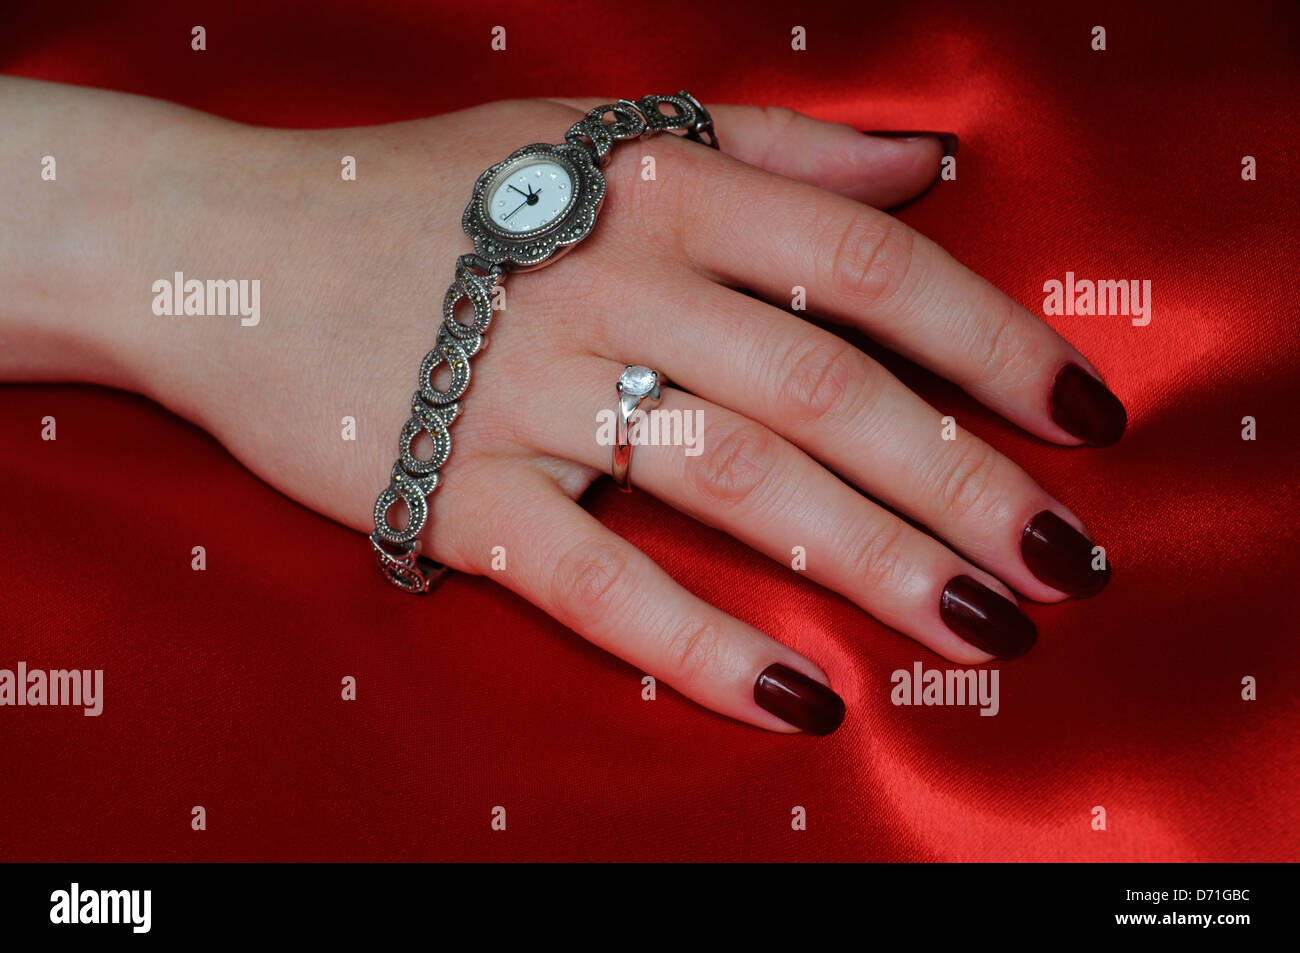 Feminine Armbanduhr und Hand auf rotem satin. Stockfoto